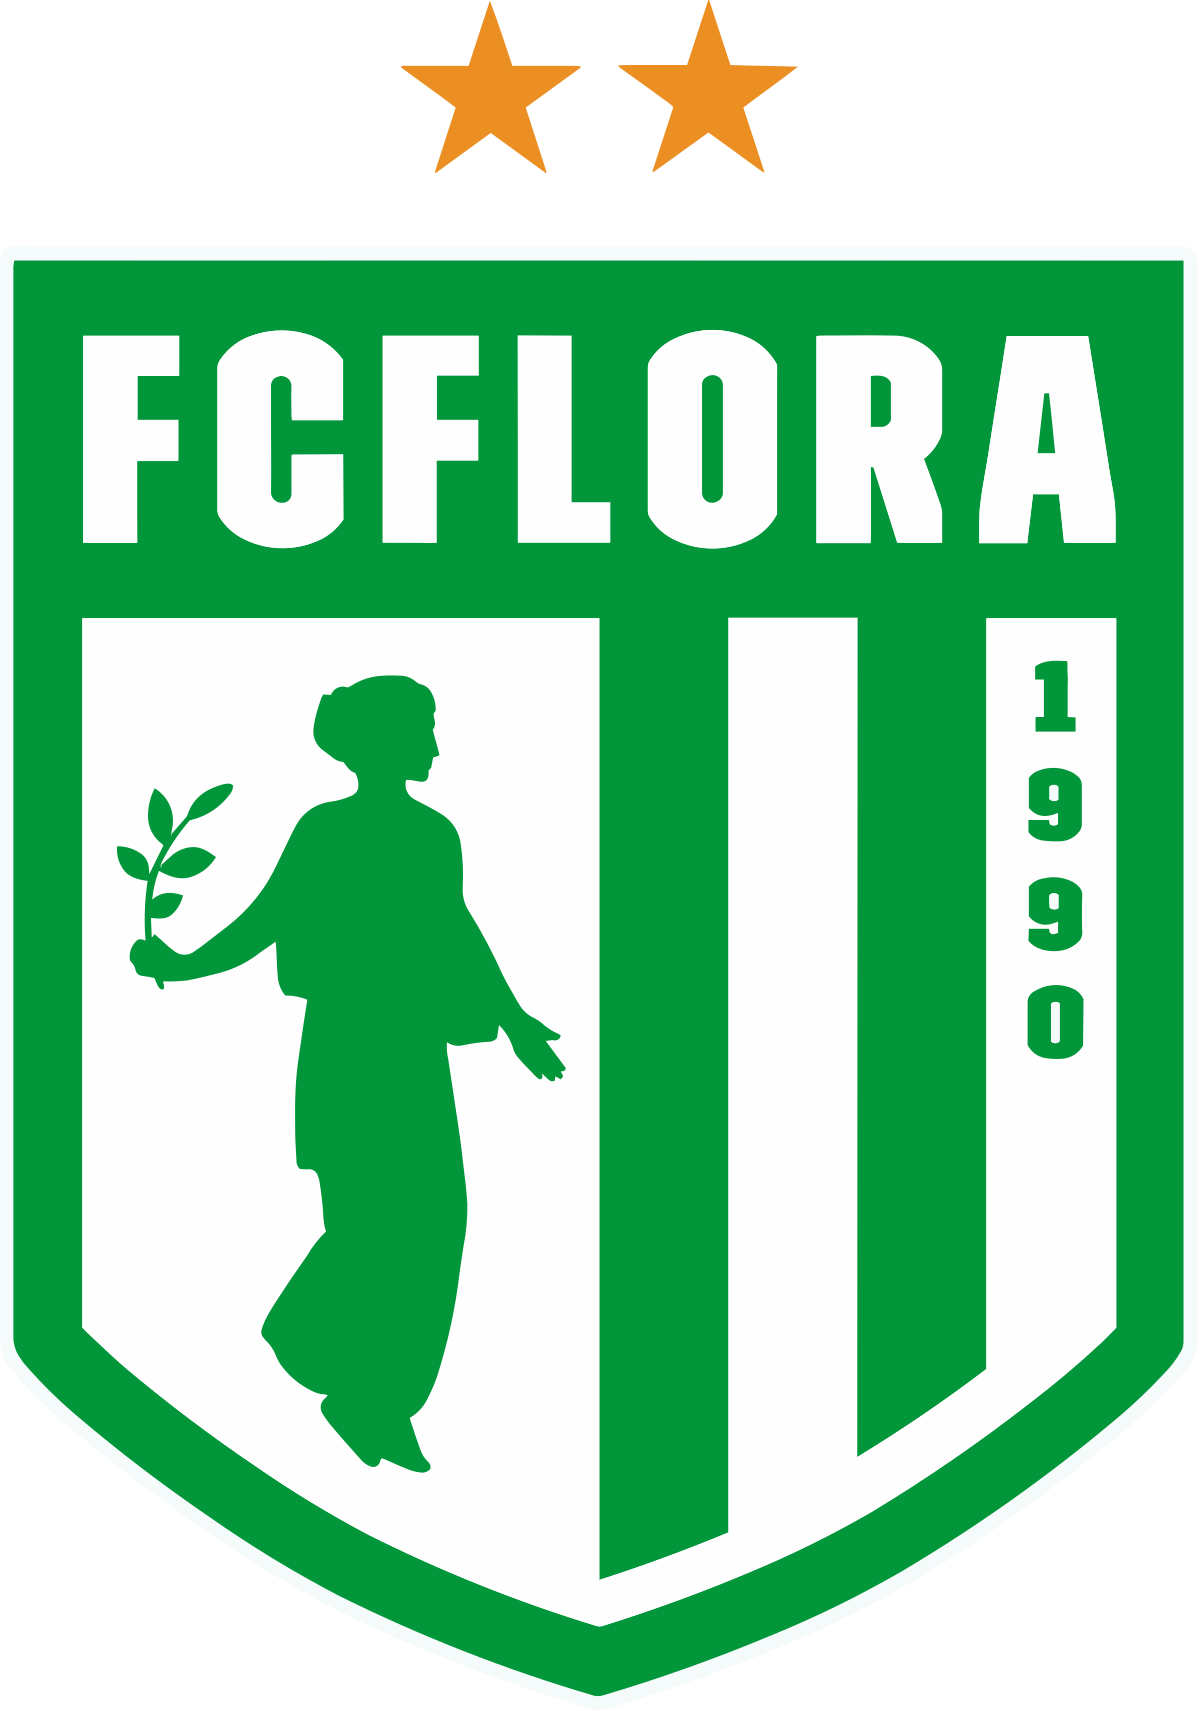 Flora Tallinn (w) team logo